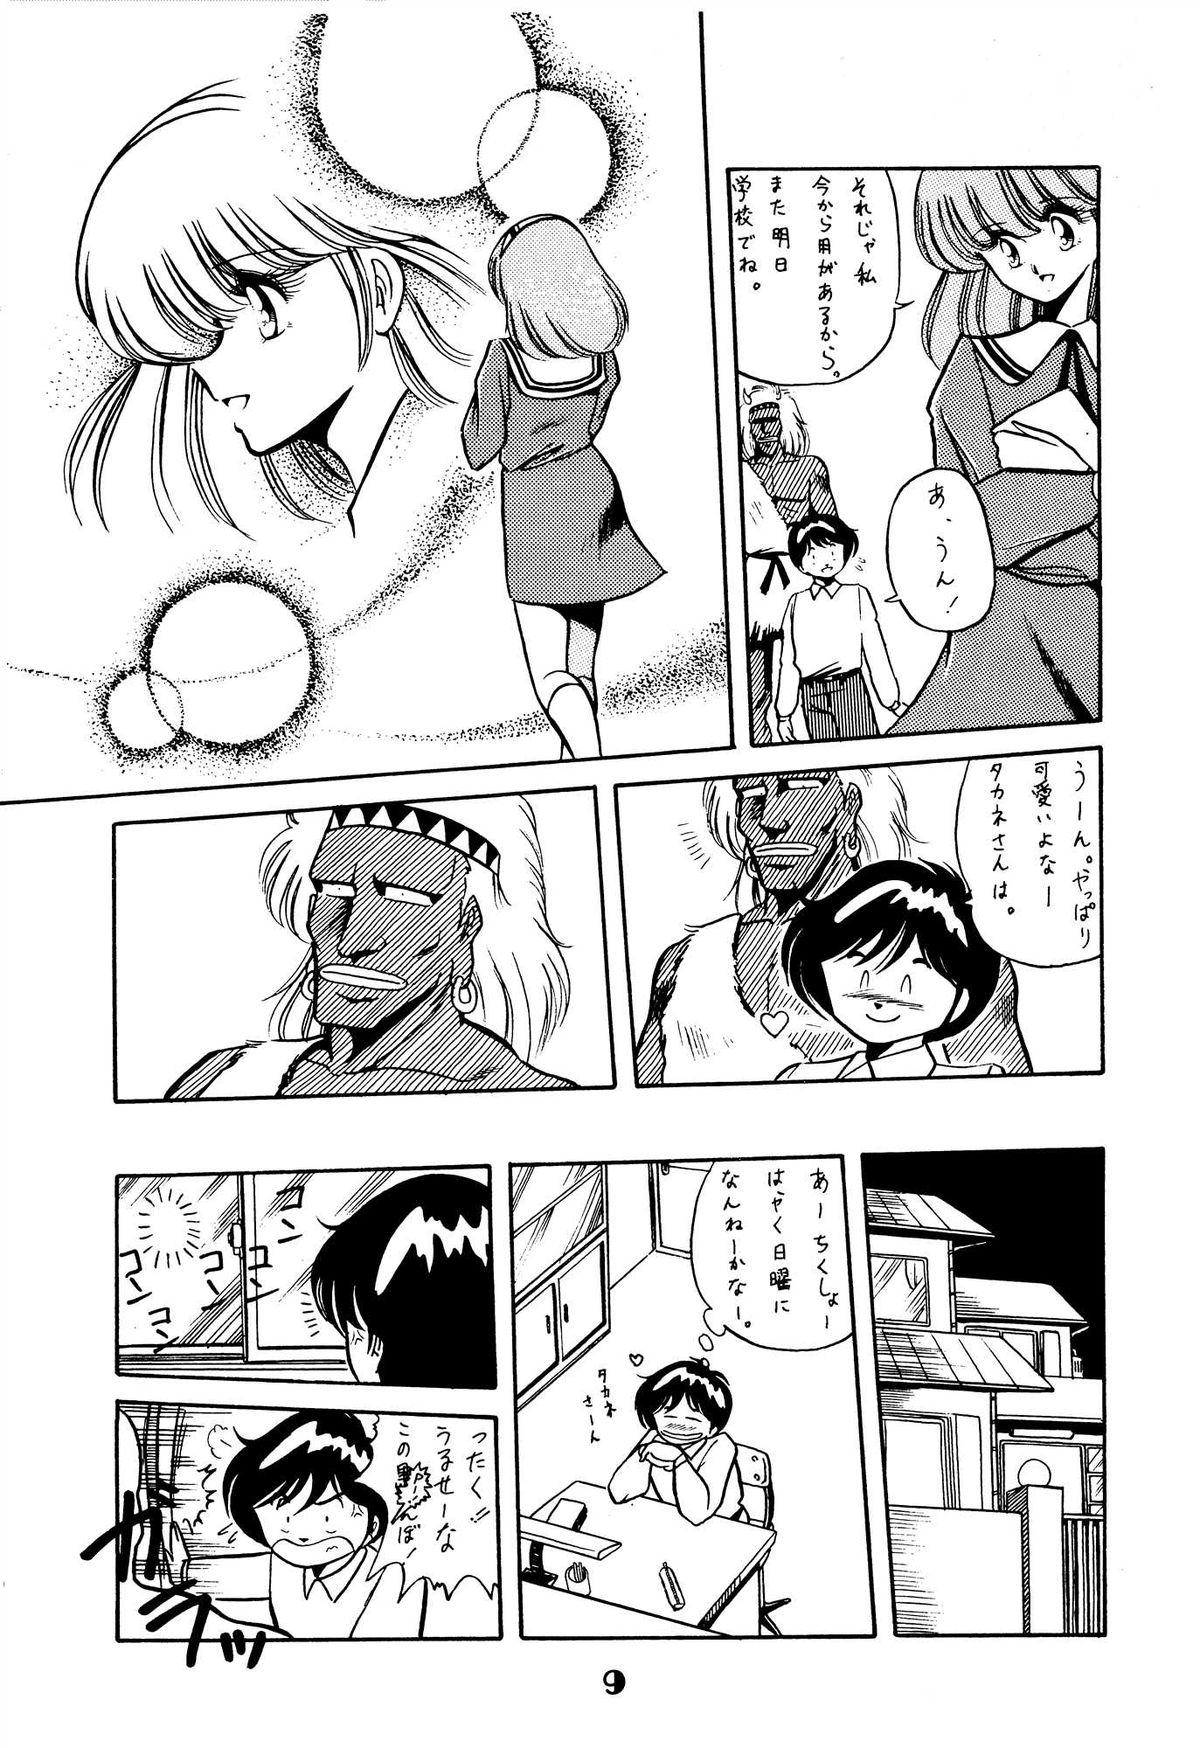 Longhair Necranomicon 5 - Fushigi no umi no nadia One - Page 9